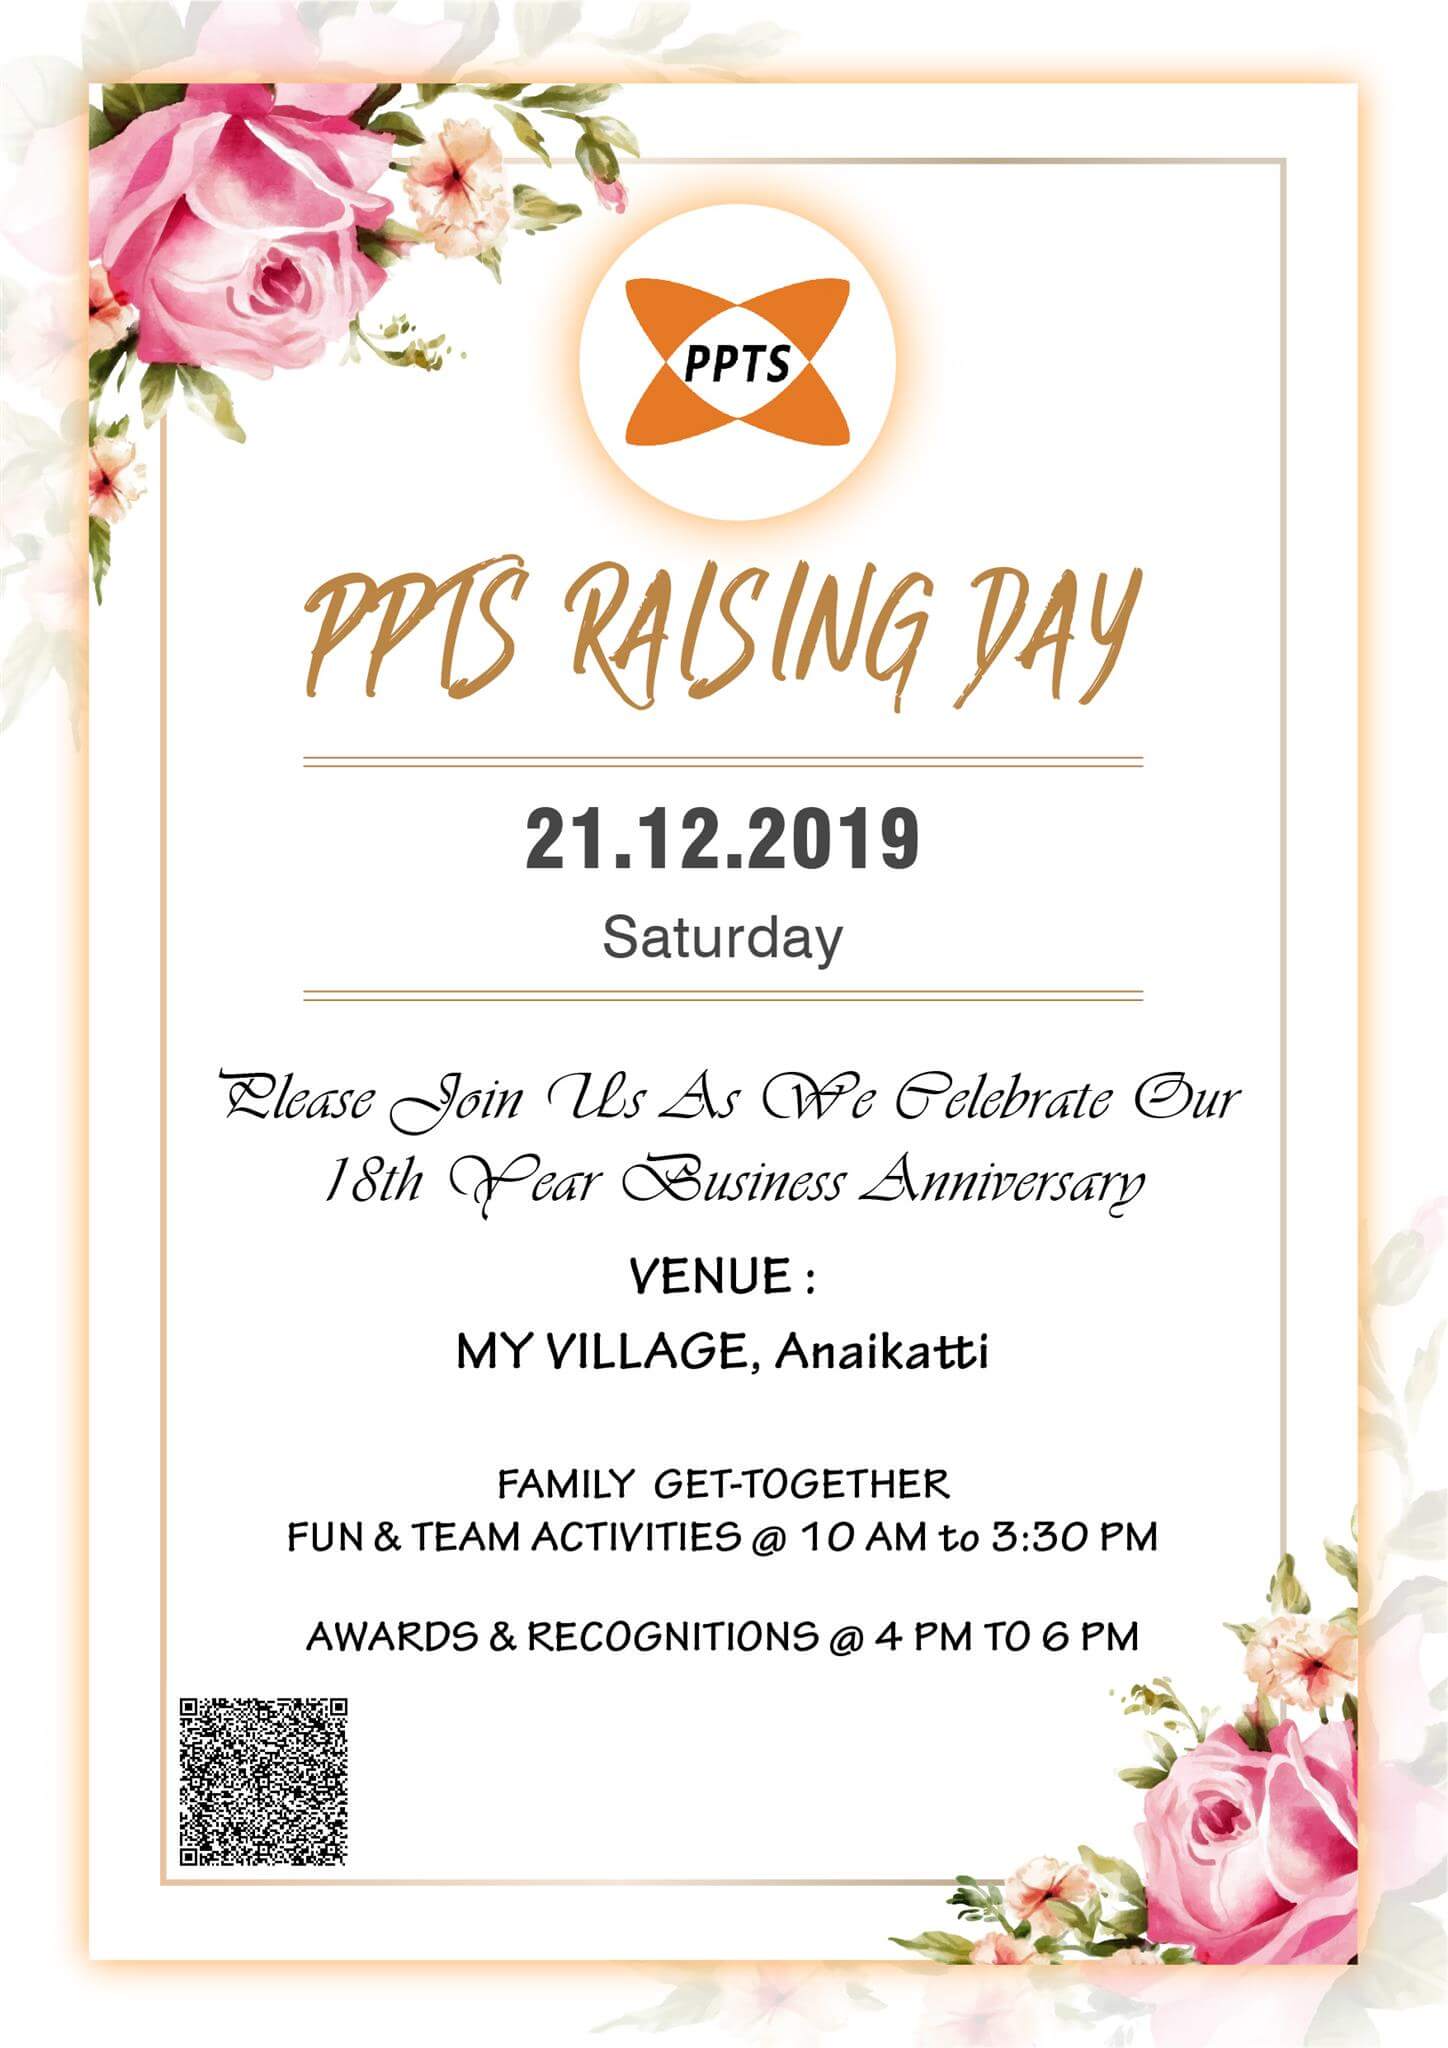 PPTS Raising Day Invitation Design 2